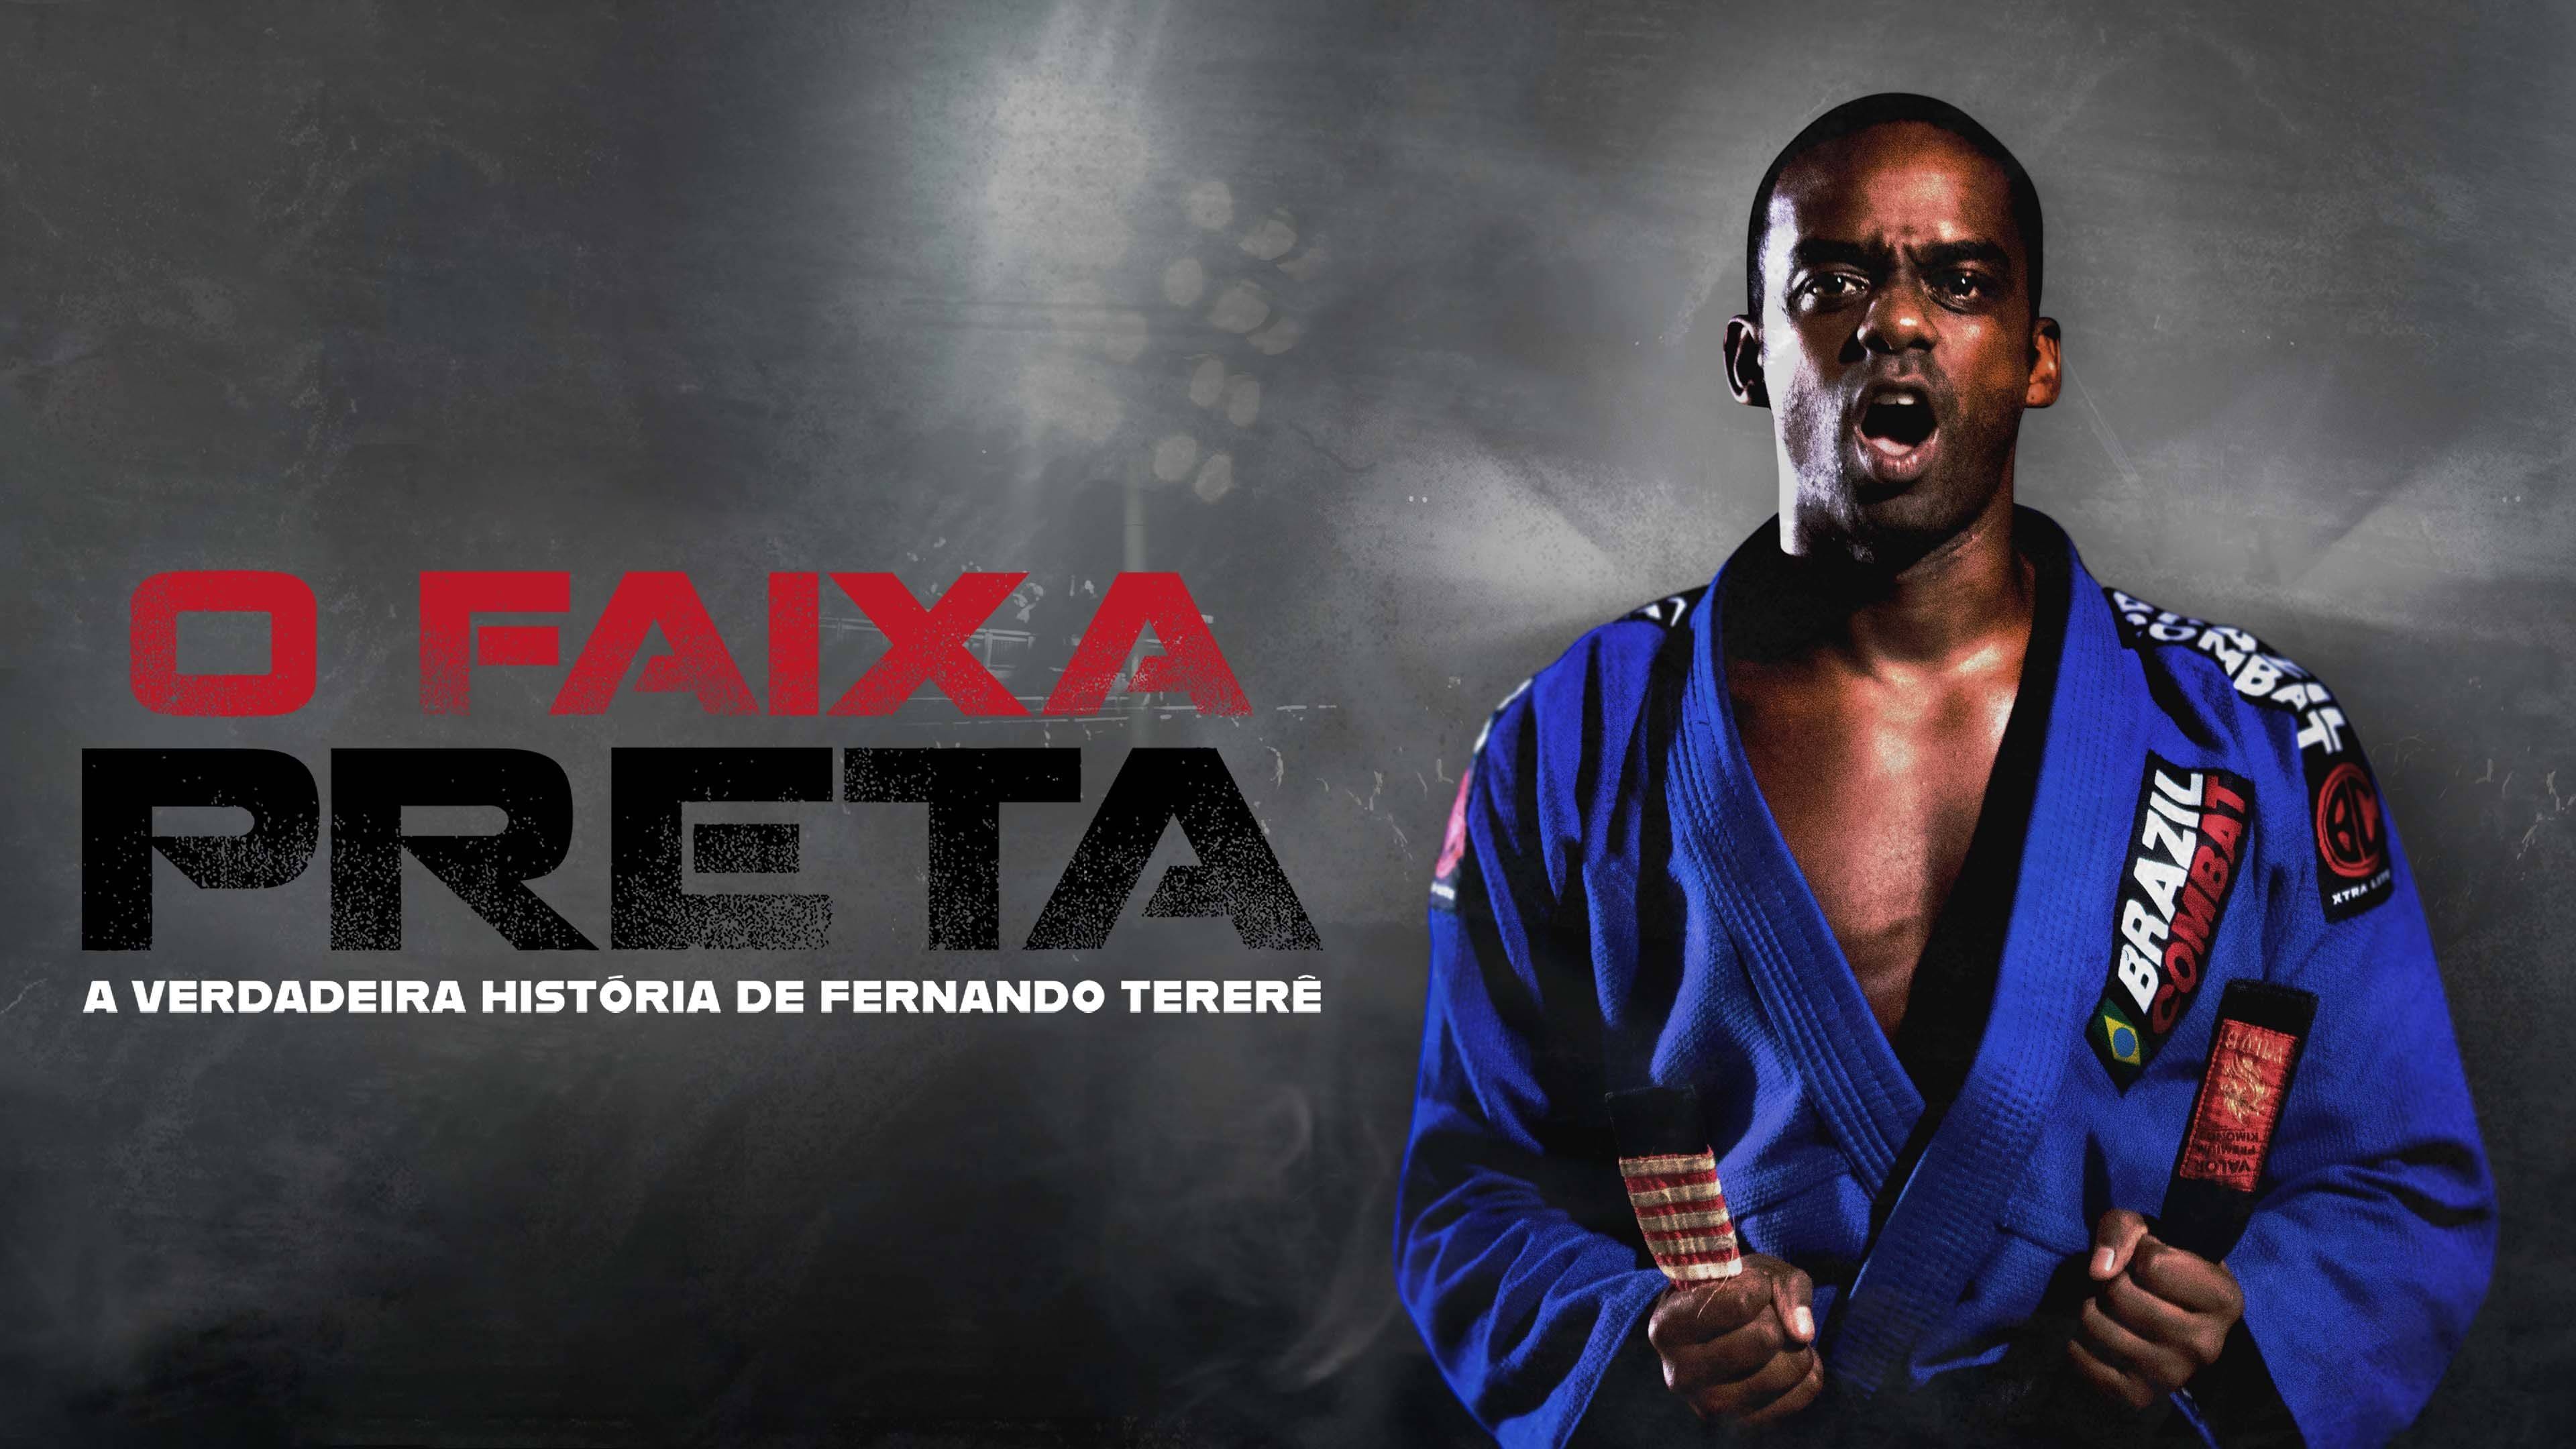 The Black Belt The True History of Fernando Terere